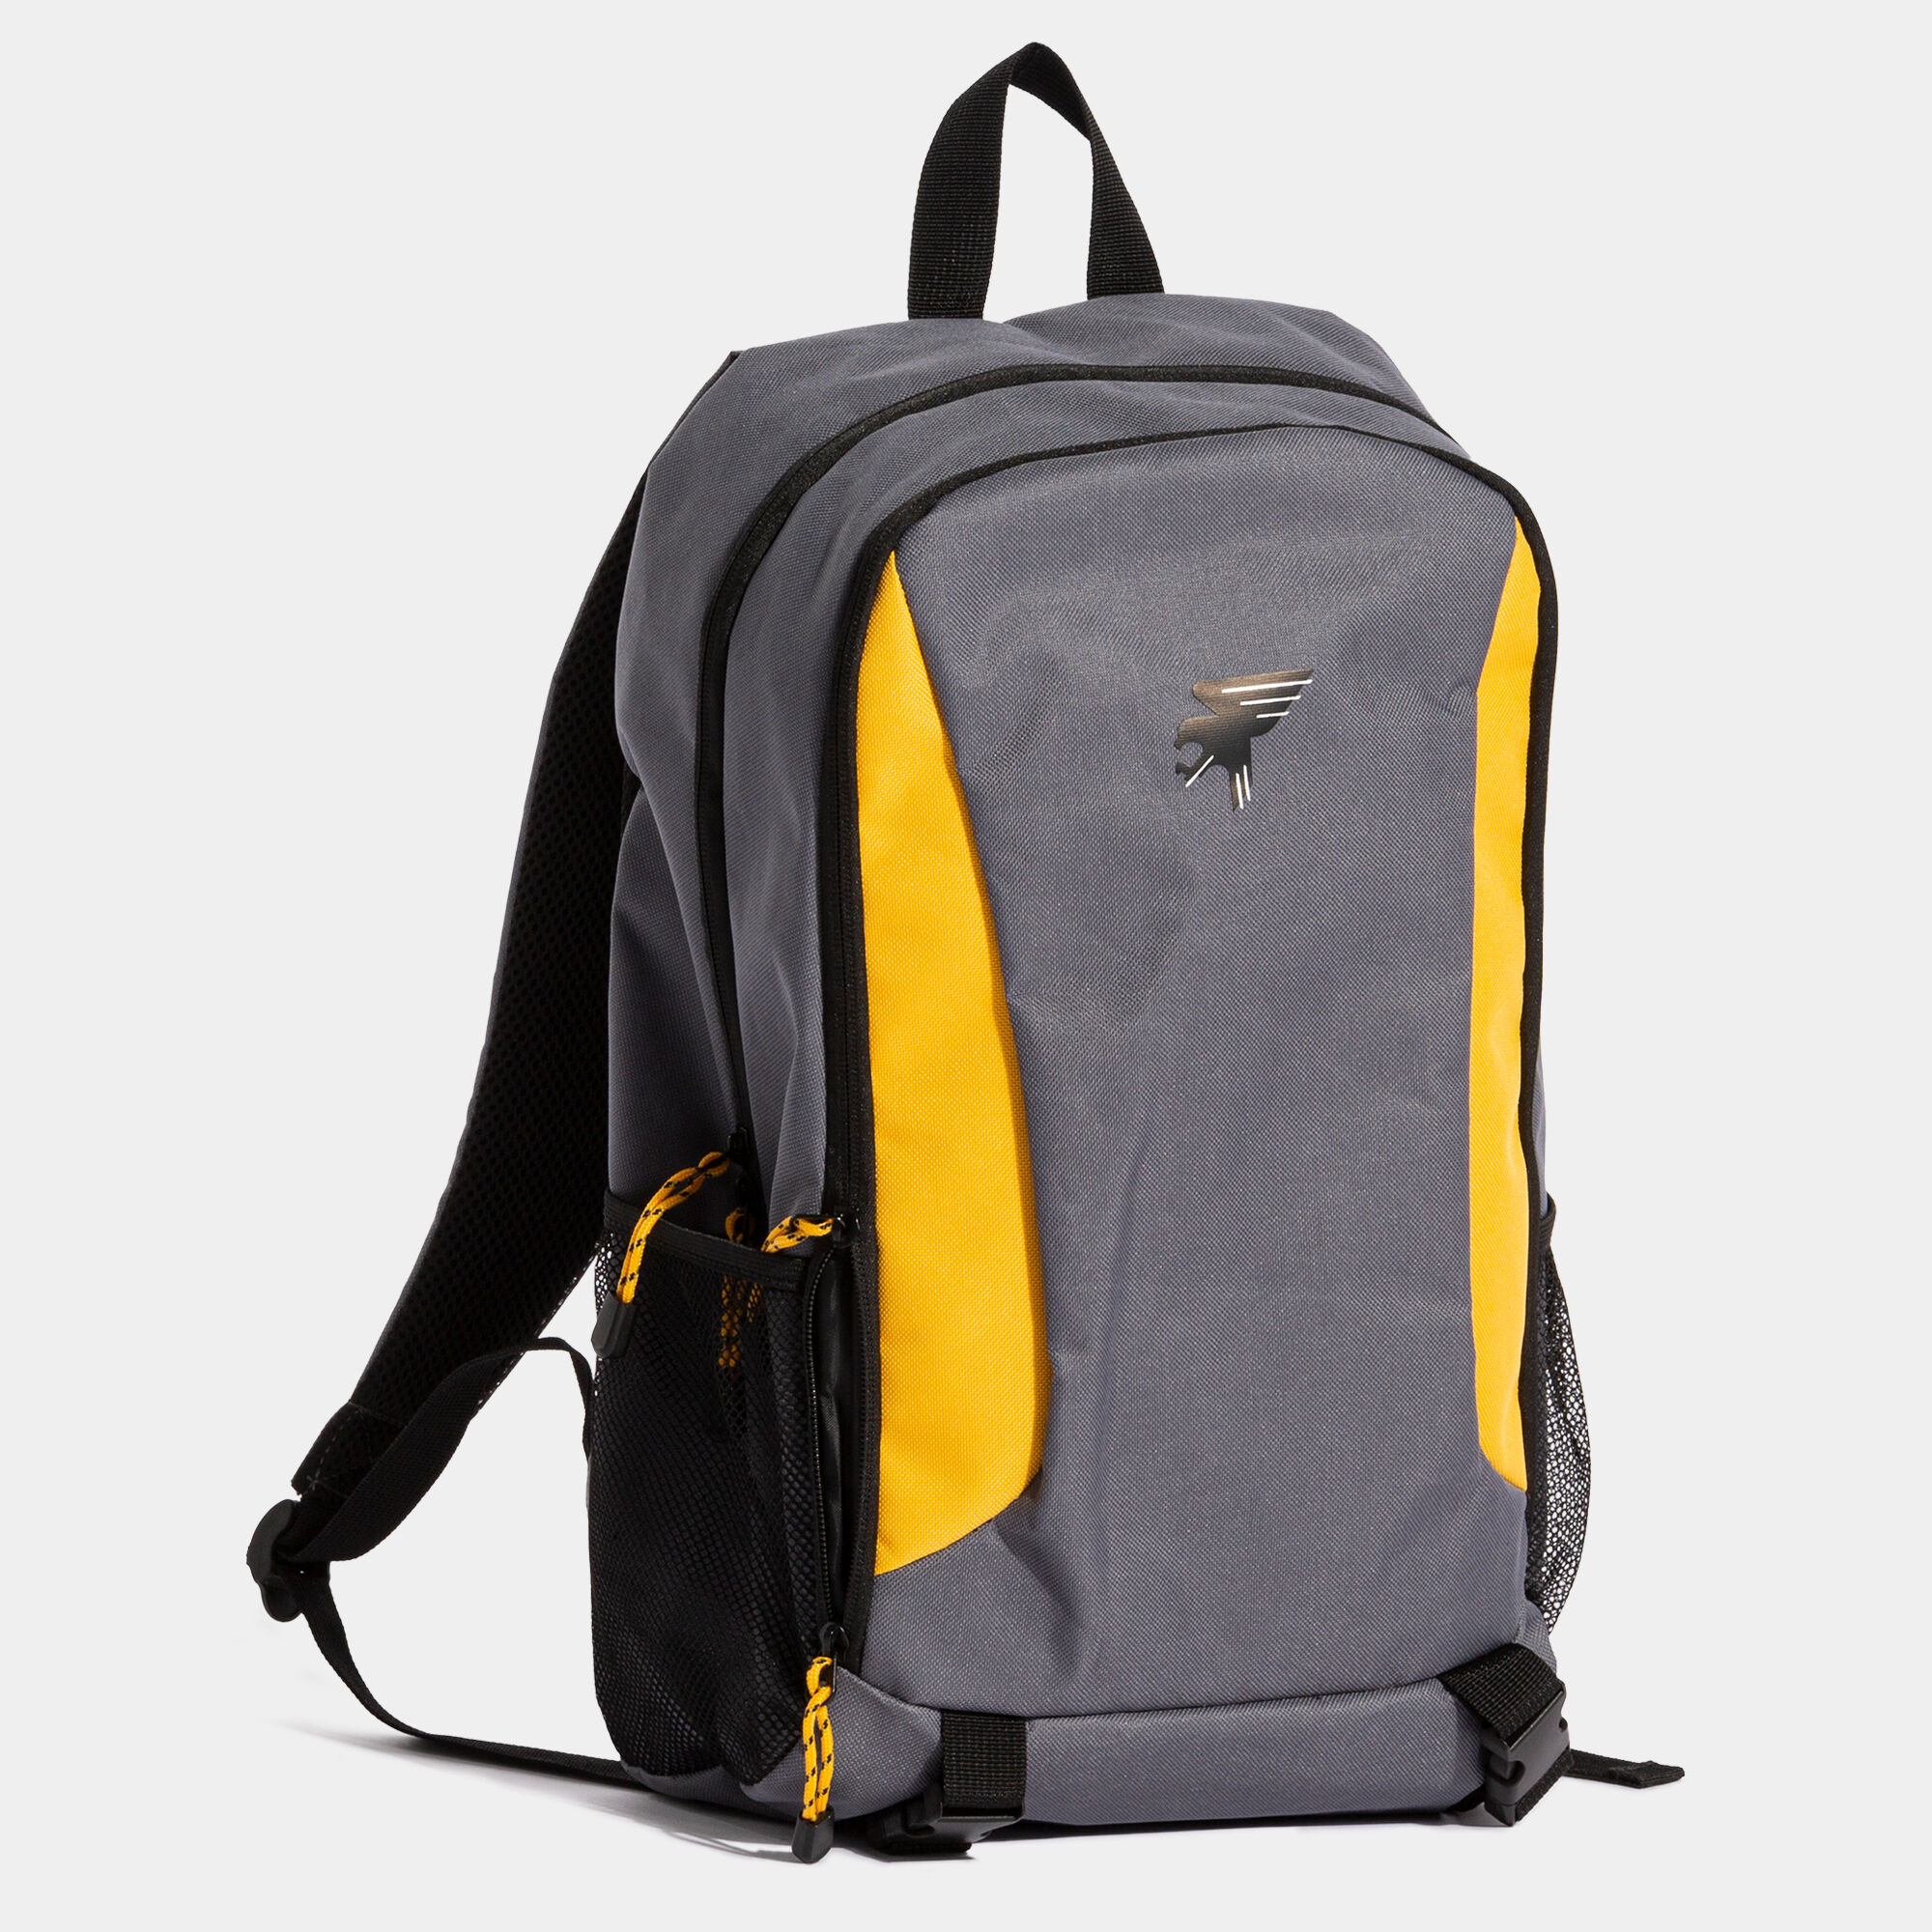 Backpack - shoe bag Explorer dark gray yellow